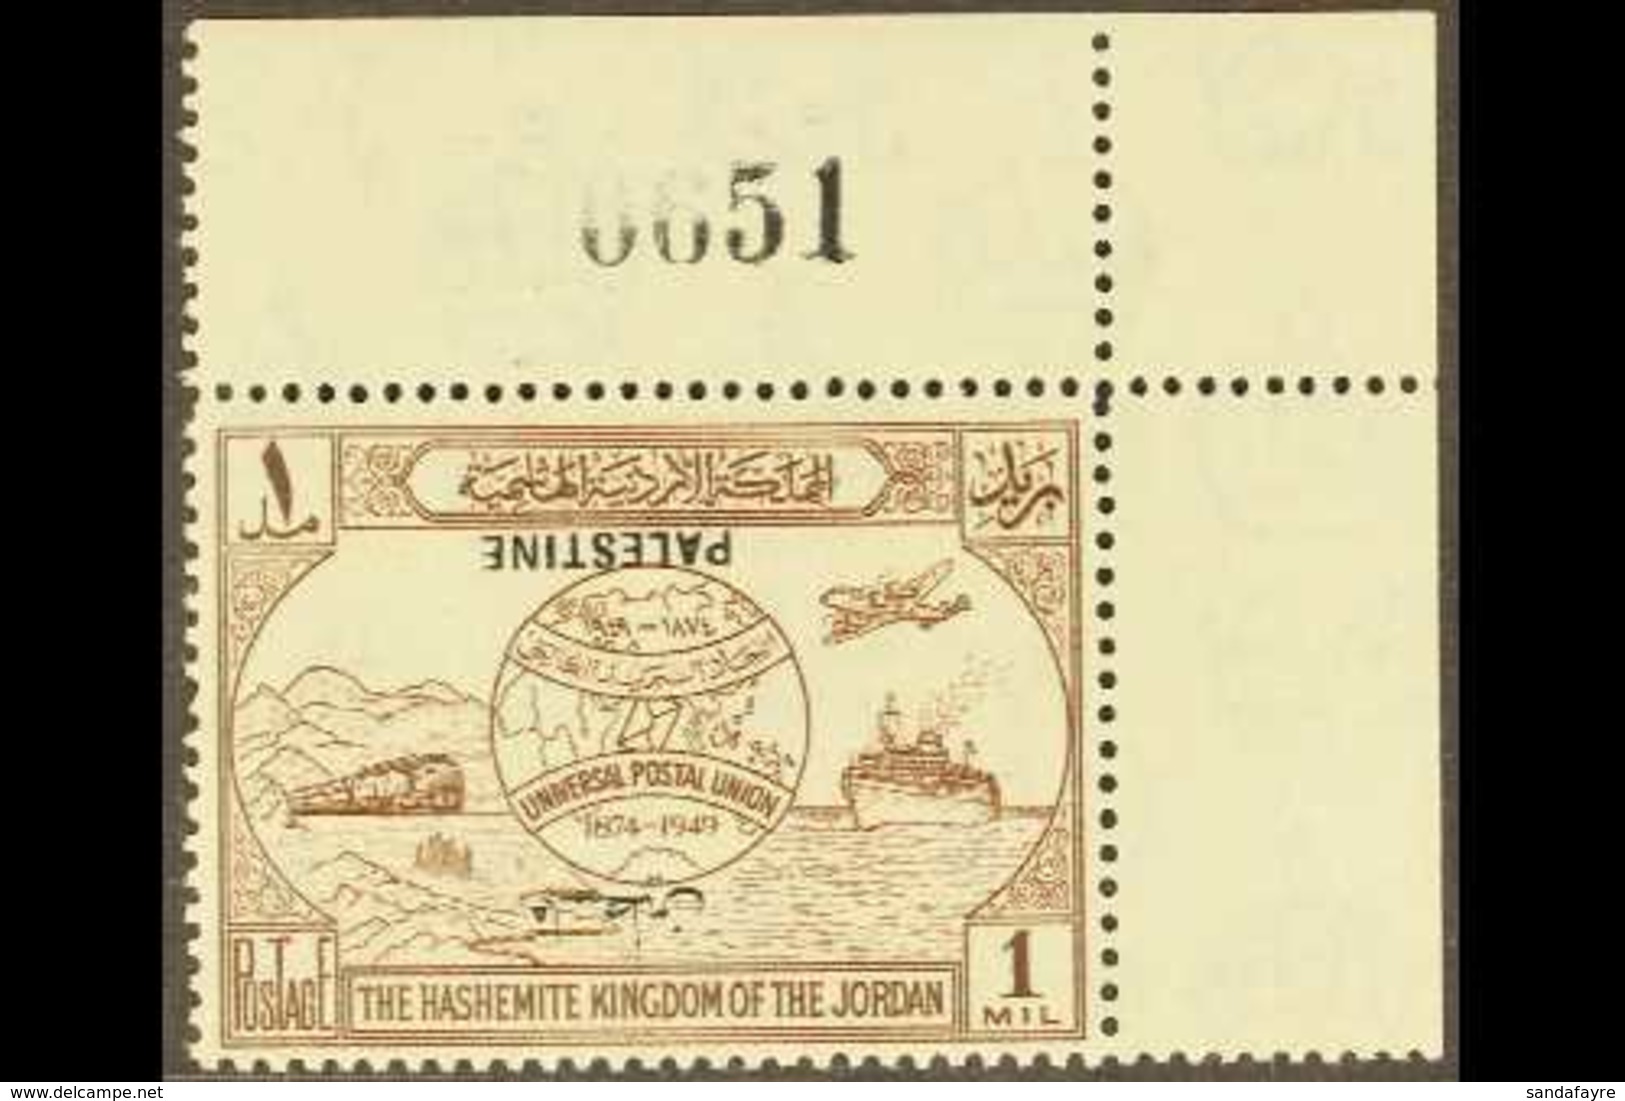 OCCUPATION OF PALESTINE 1949 1m Brown UPU With OVERPRINT INVERTED Variety, SG P30a, Superb Never Hinged Mint Corner Marg - Jordan